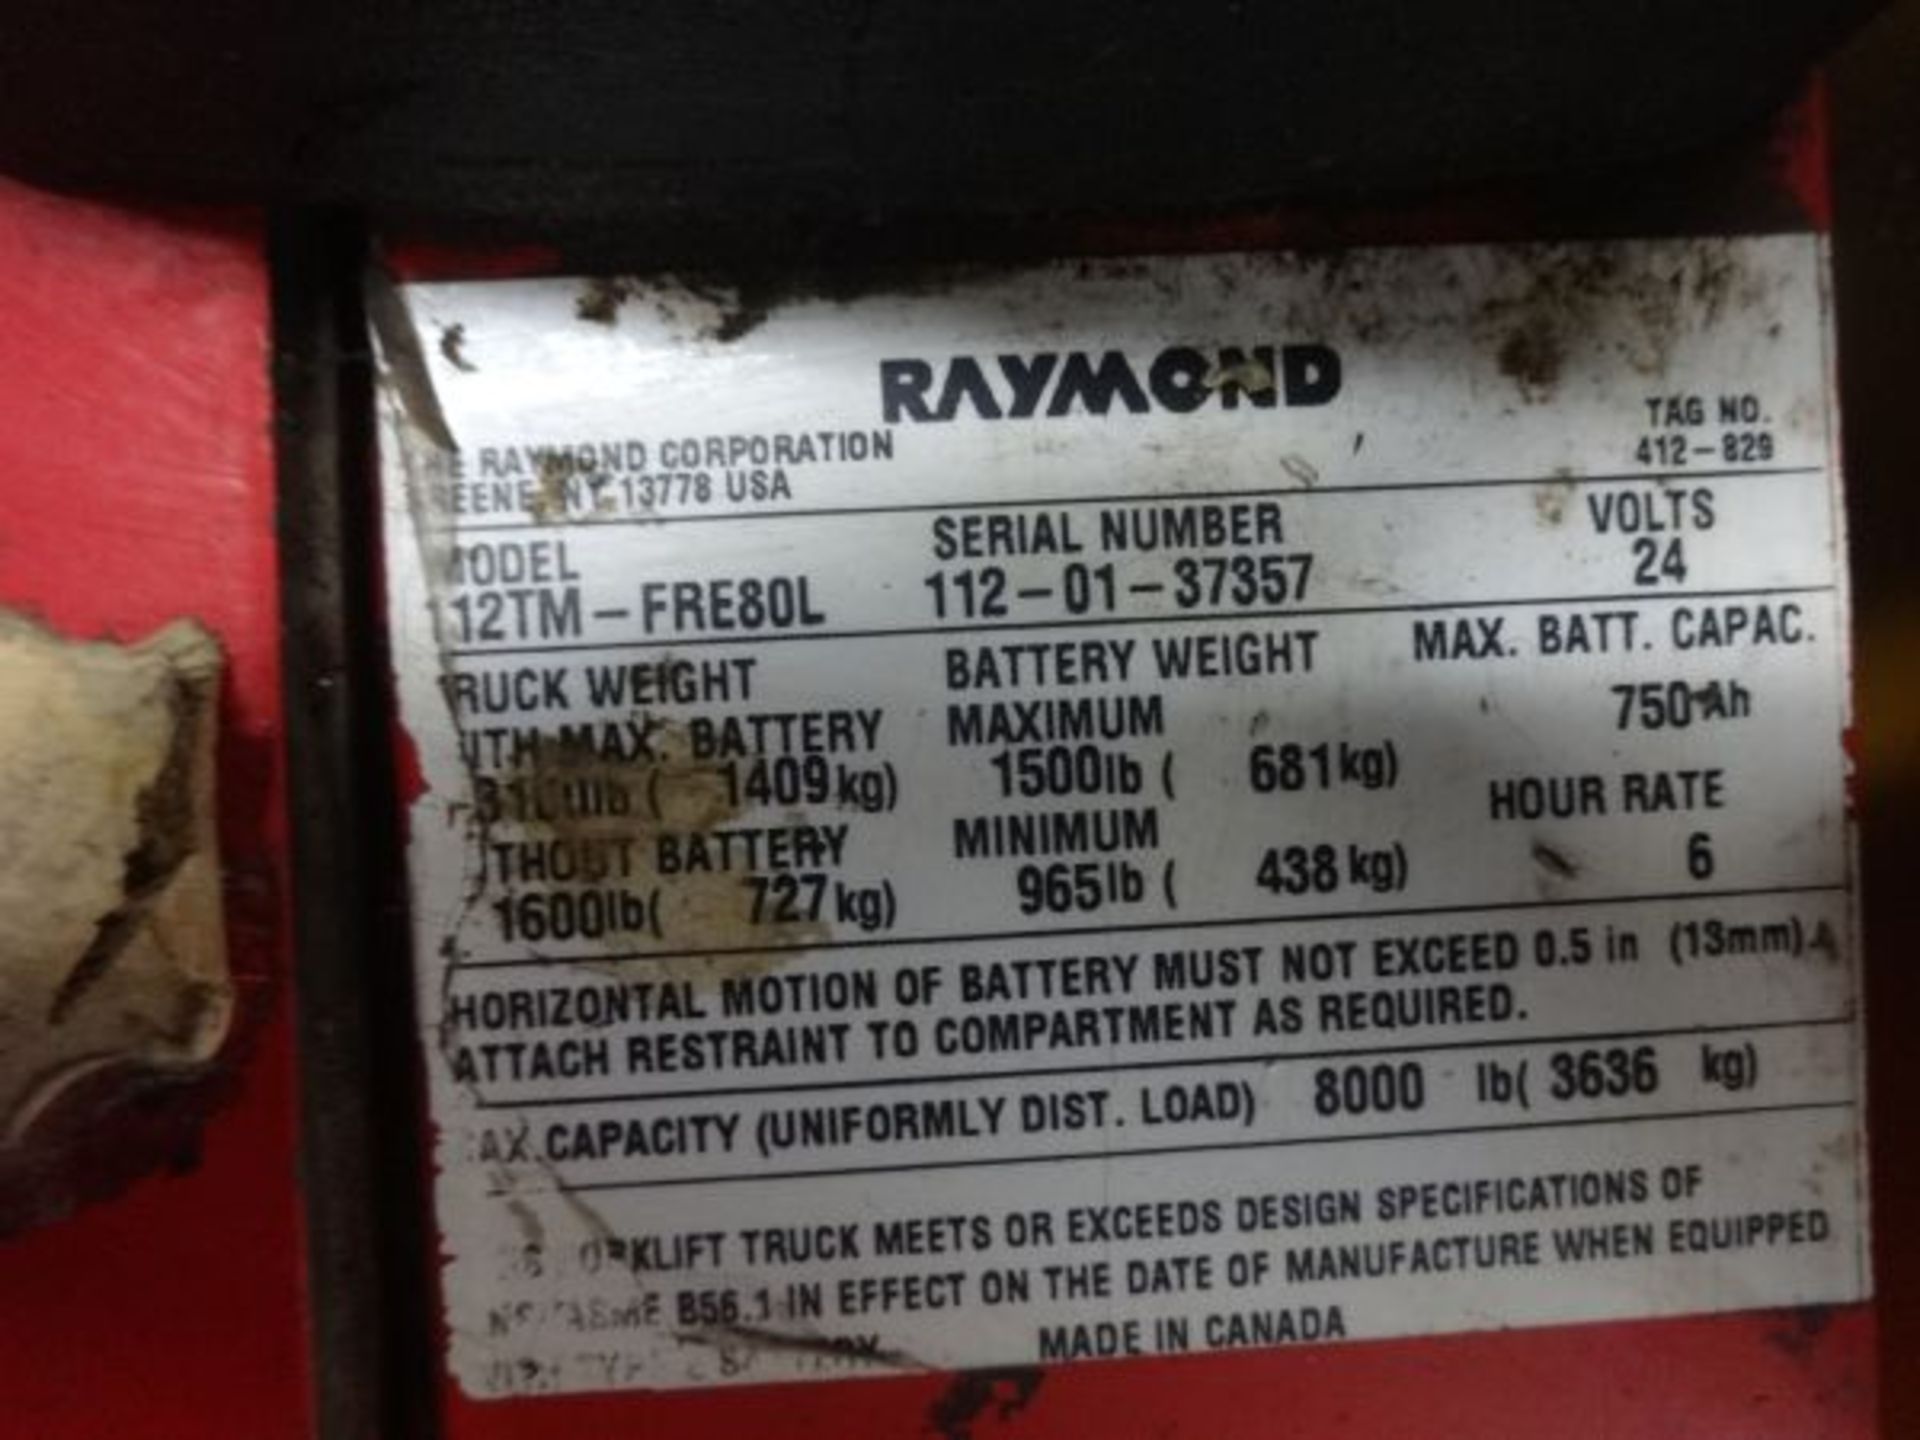 8,000 LB RAYMOND MODEL 112TM-FRE80L DUAL PALLET END RIDER ELECTRIC PALLET TRUCK; S/N 112-01-37357, - Bild 4 aus 7